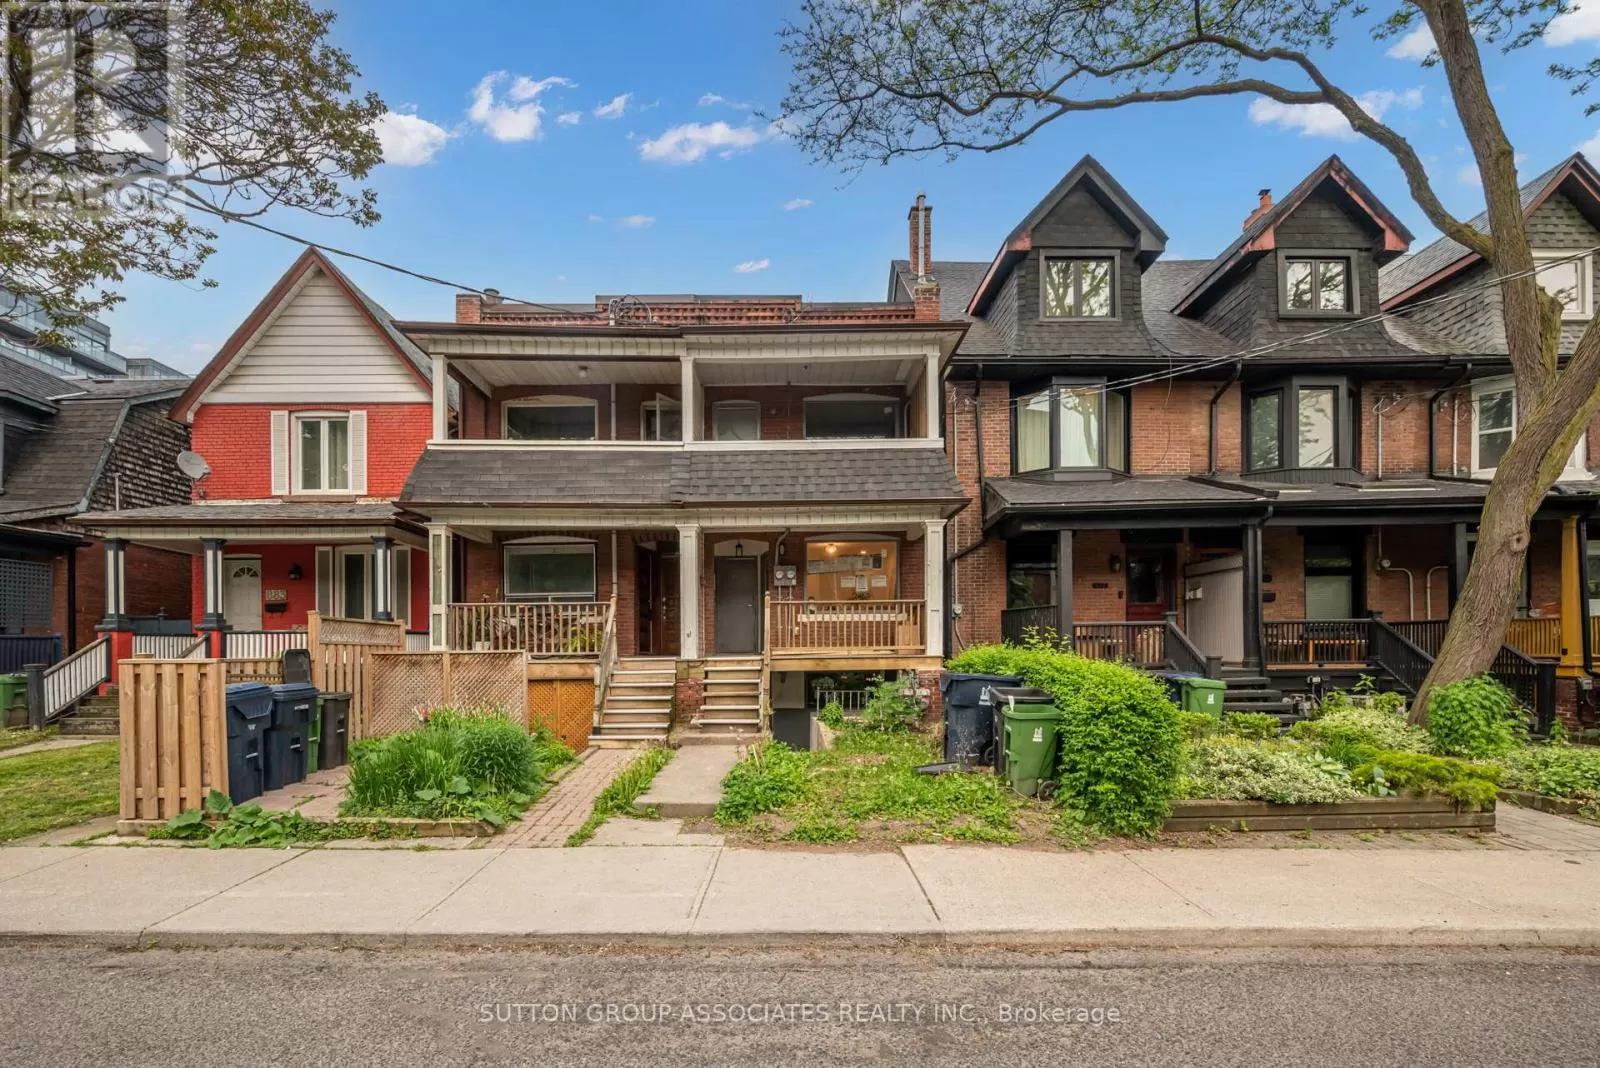 House for rent: Main - 879 Palmerston Avenue, Toronto, Ontario M6G 2S3